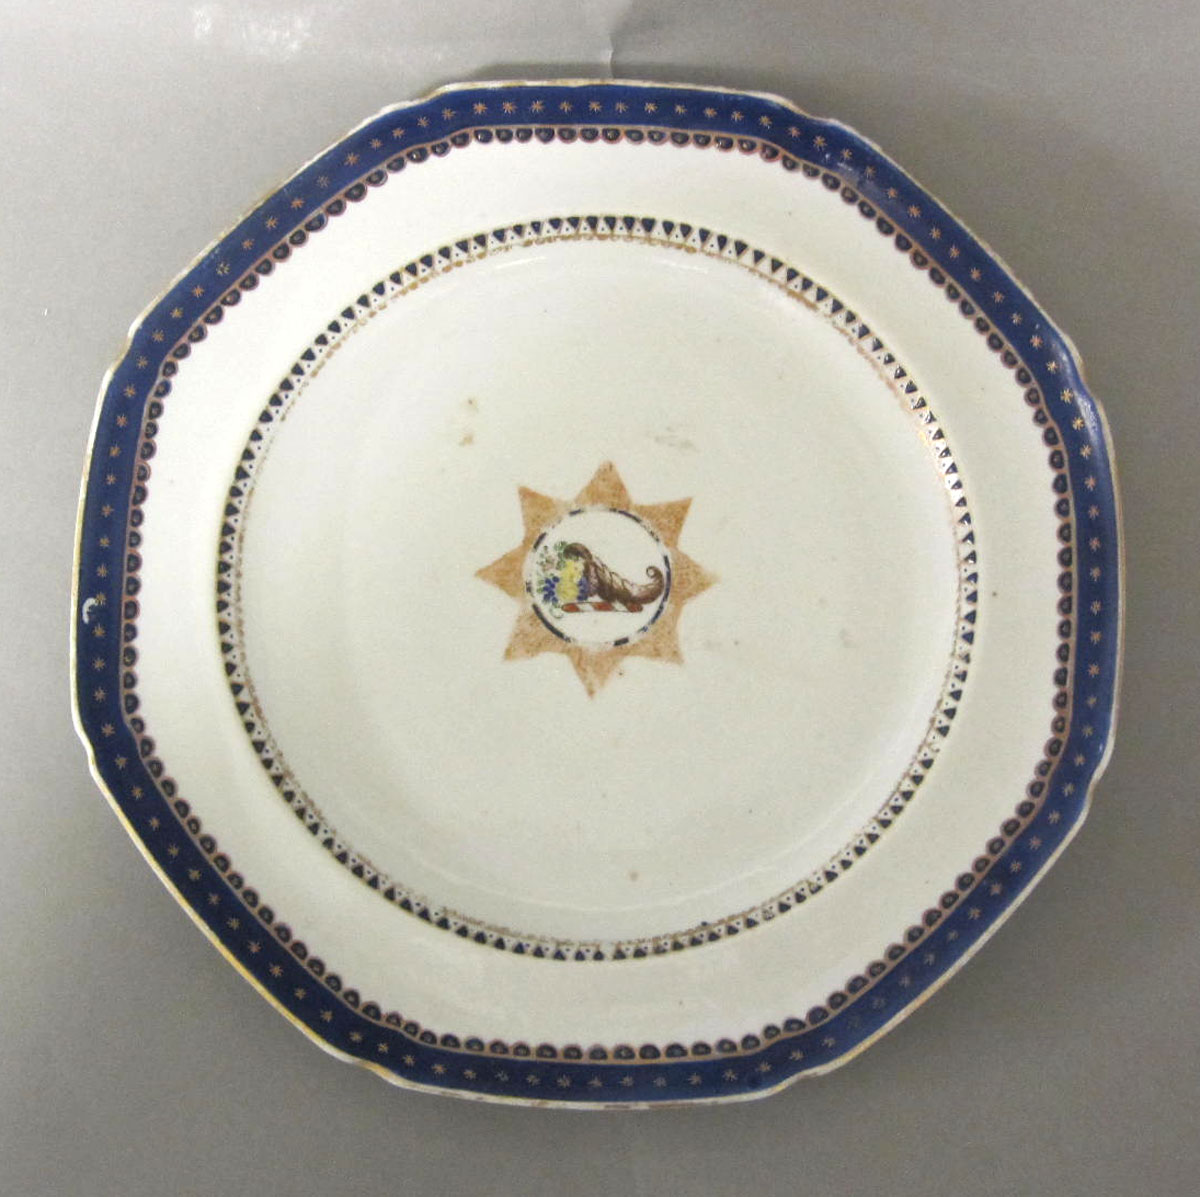 1965.0718.009 Porcelain plate